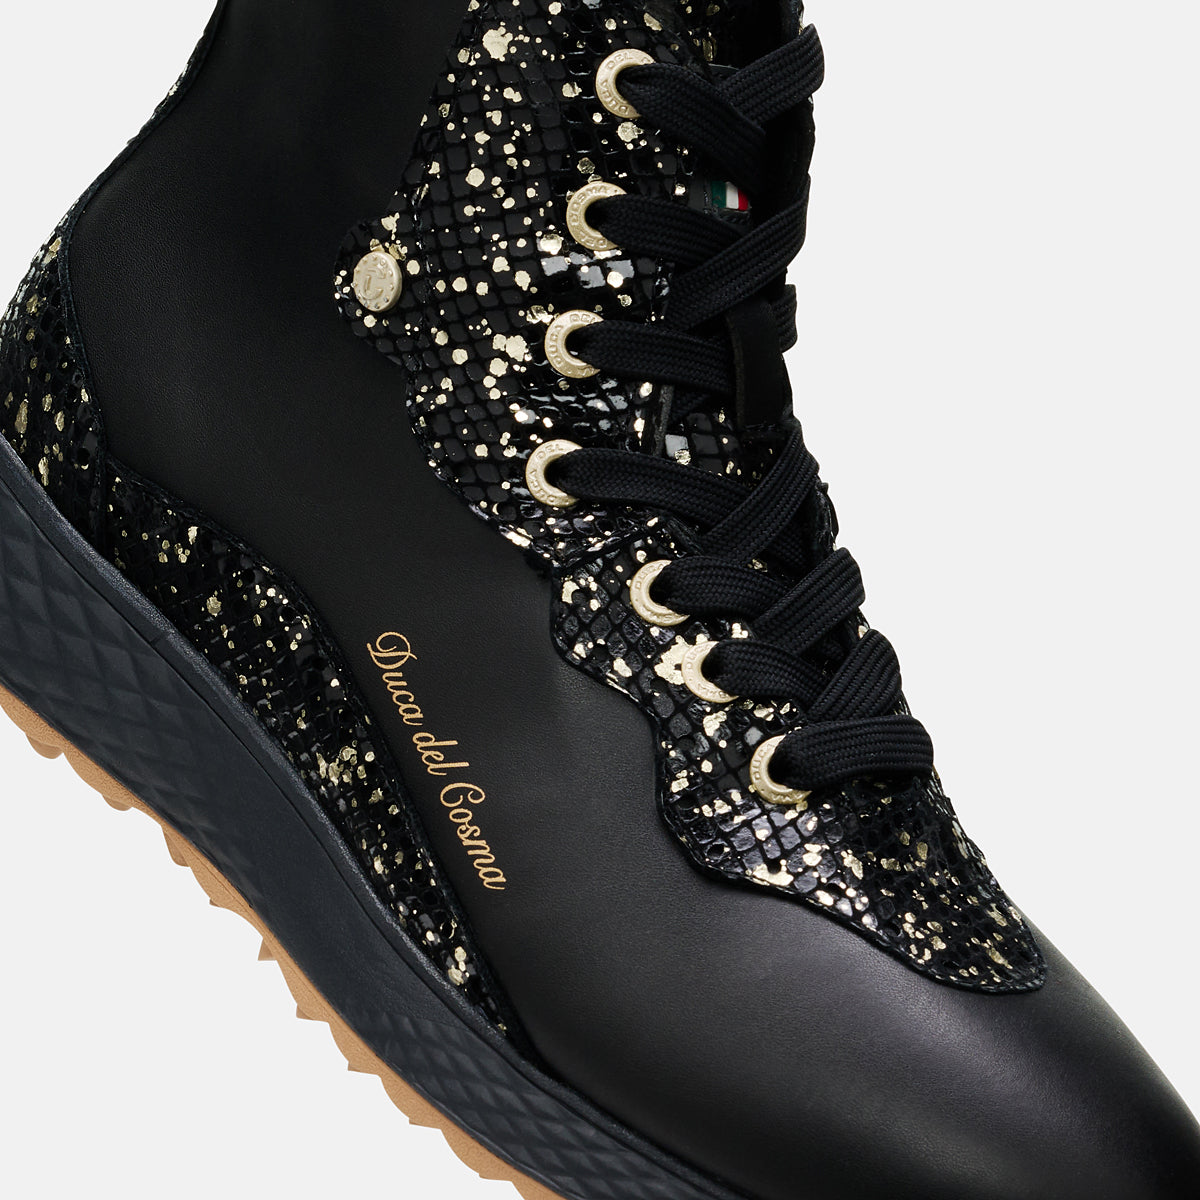 Sonesta - Black Womens Waterproof Synthetic Golf Boot close up